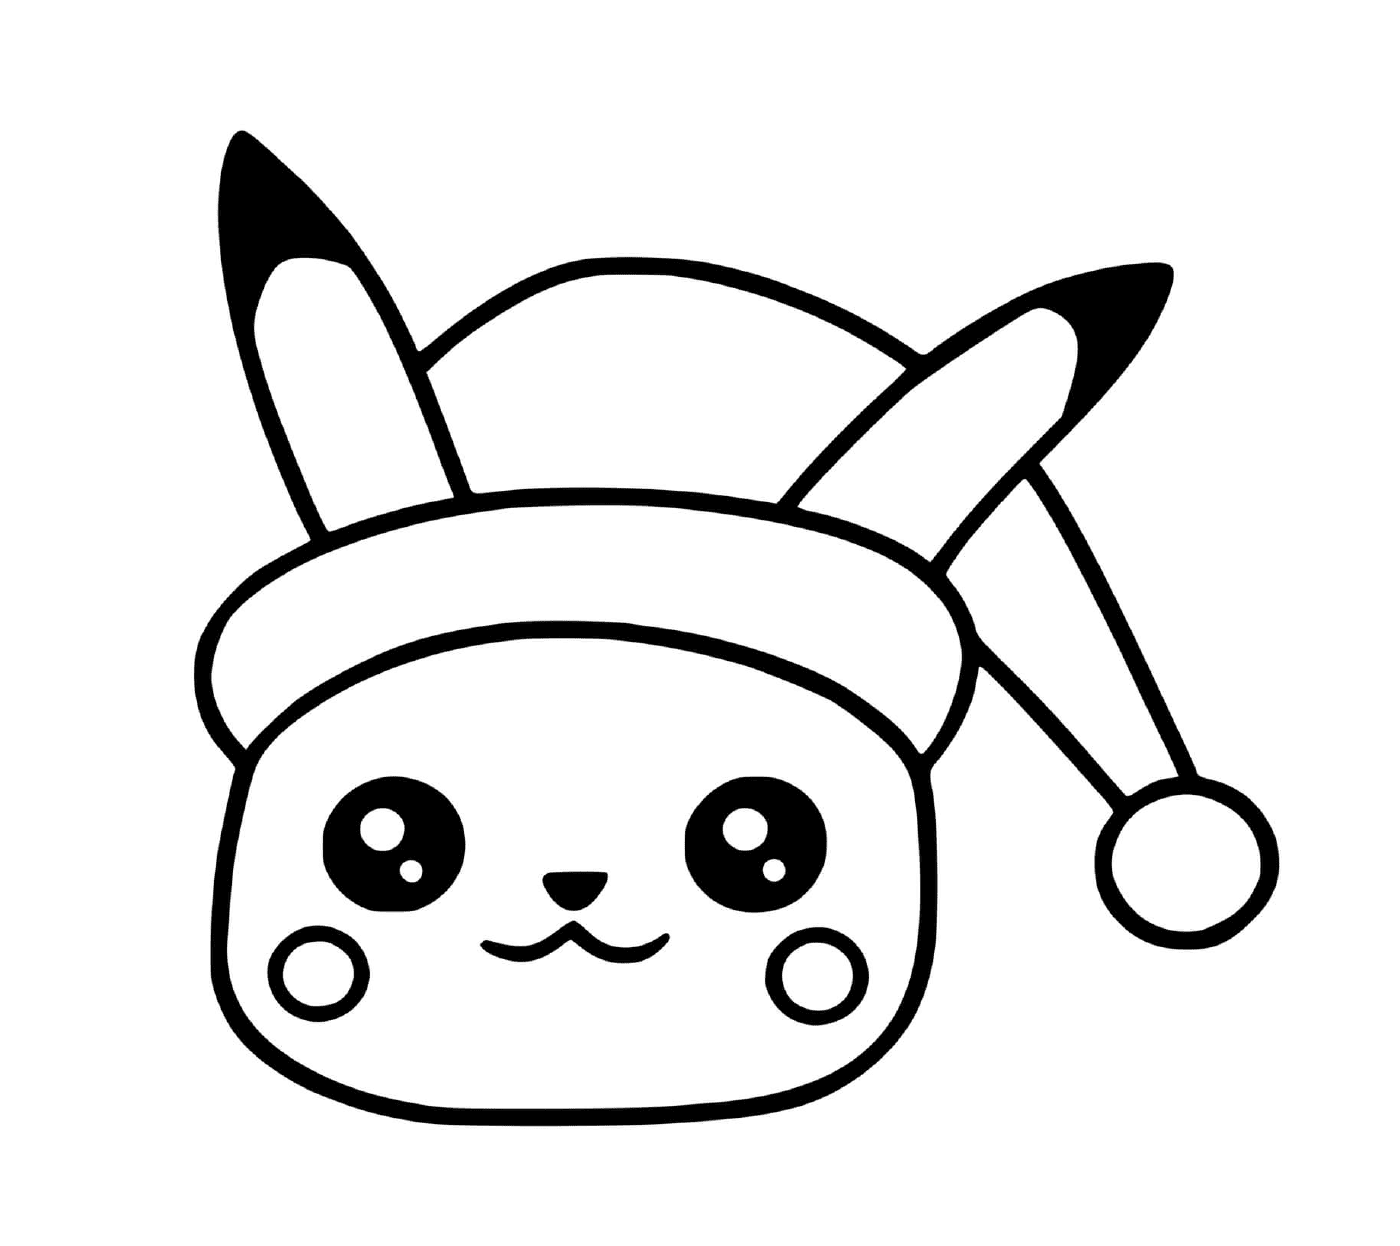  A Pikachu wearing a Christmas hat 